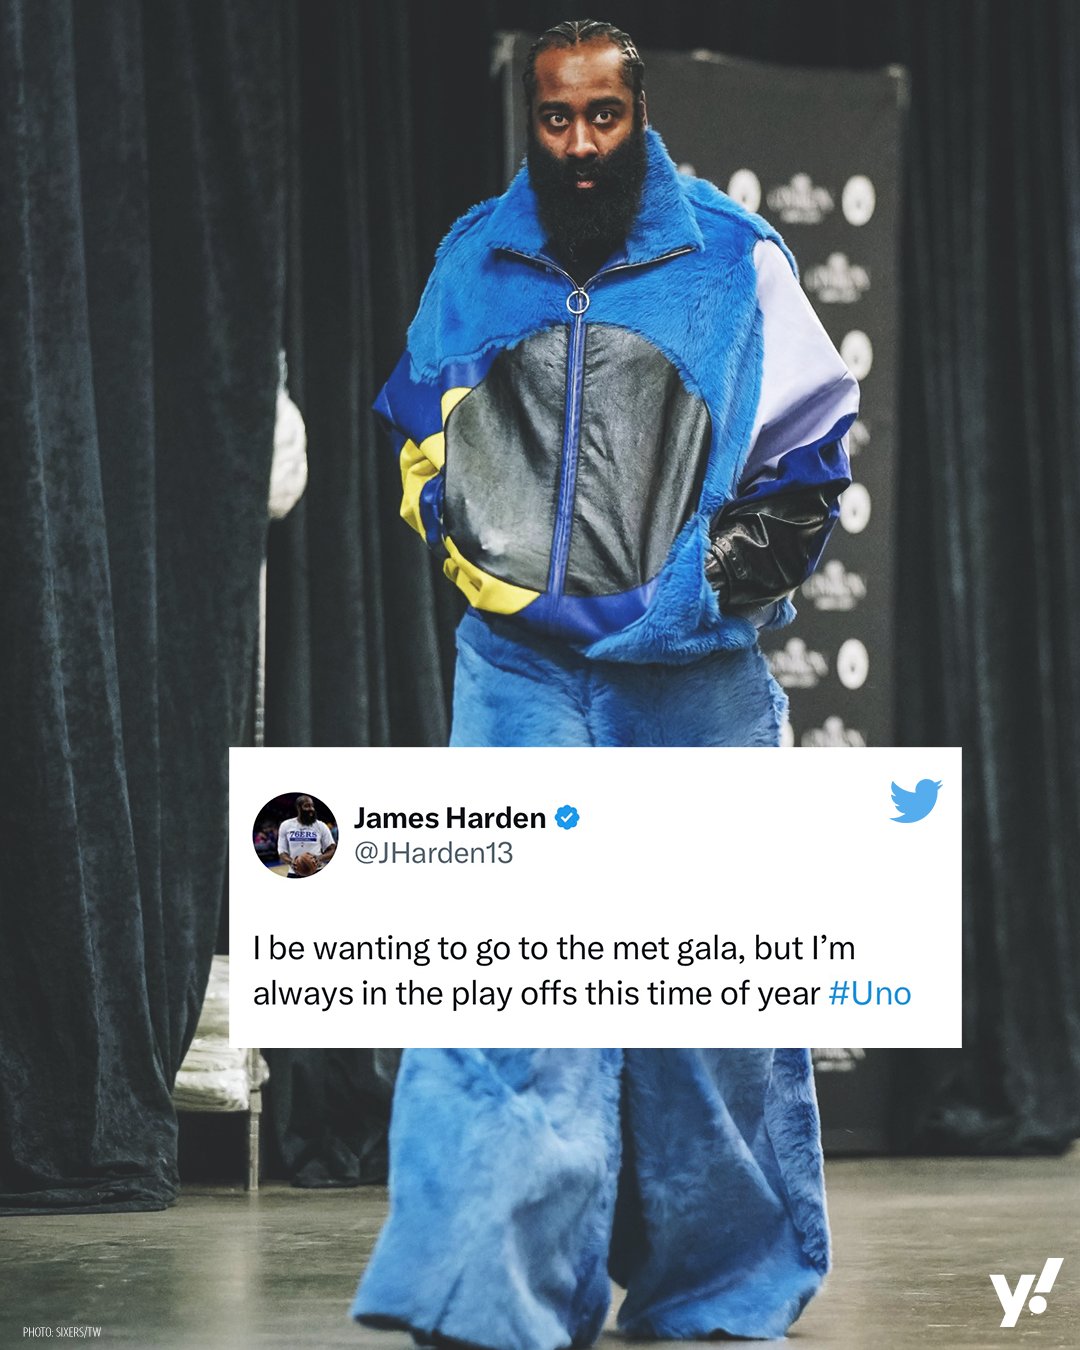 James Harden jokes about missing the Met Gala following career night